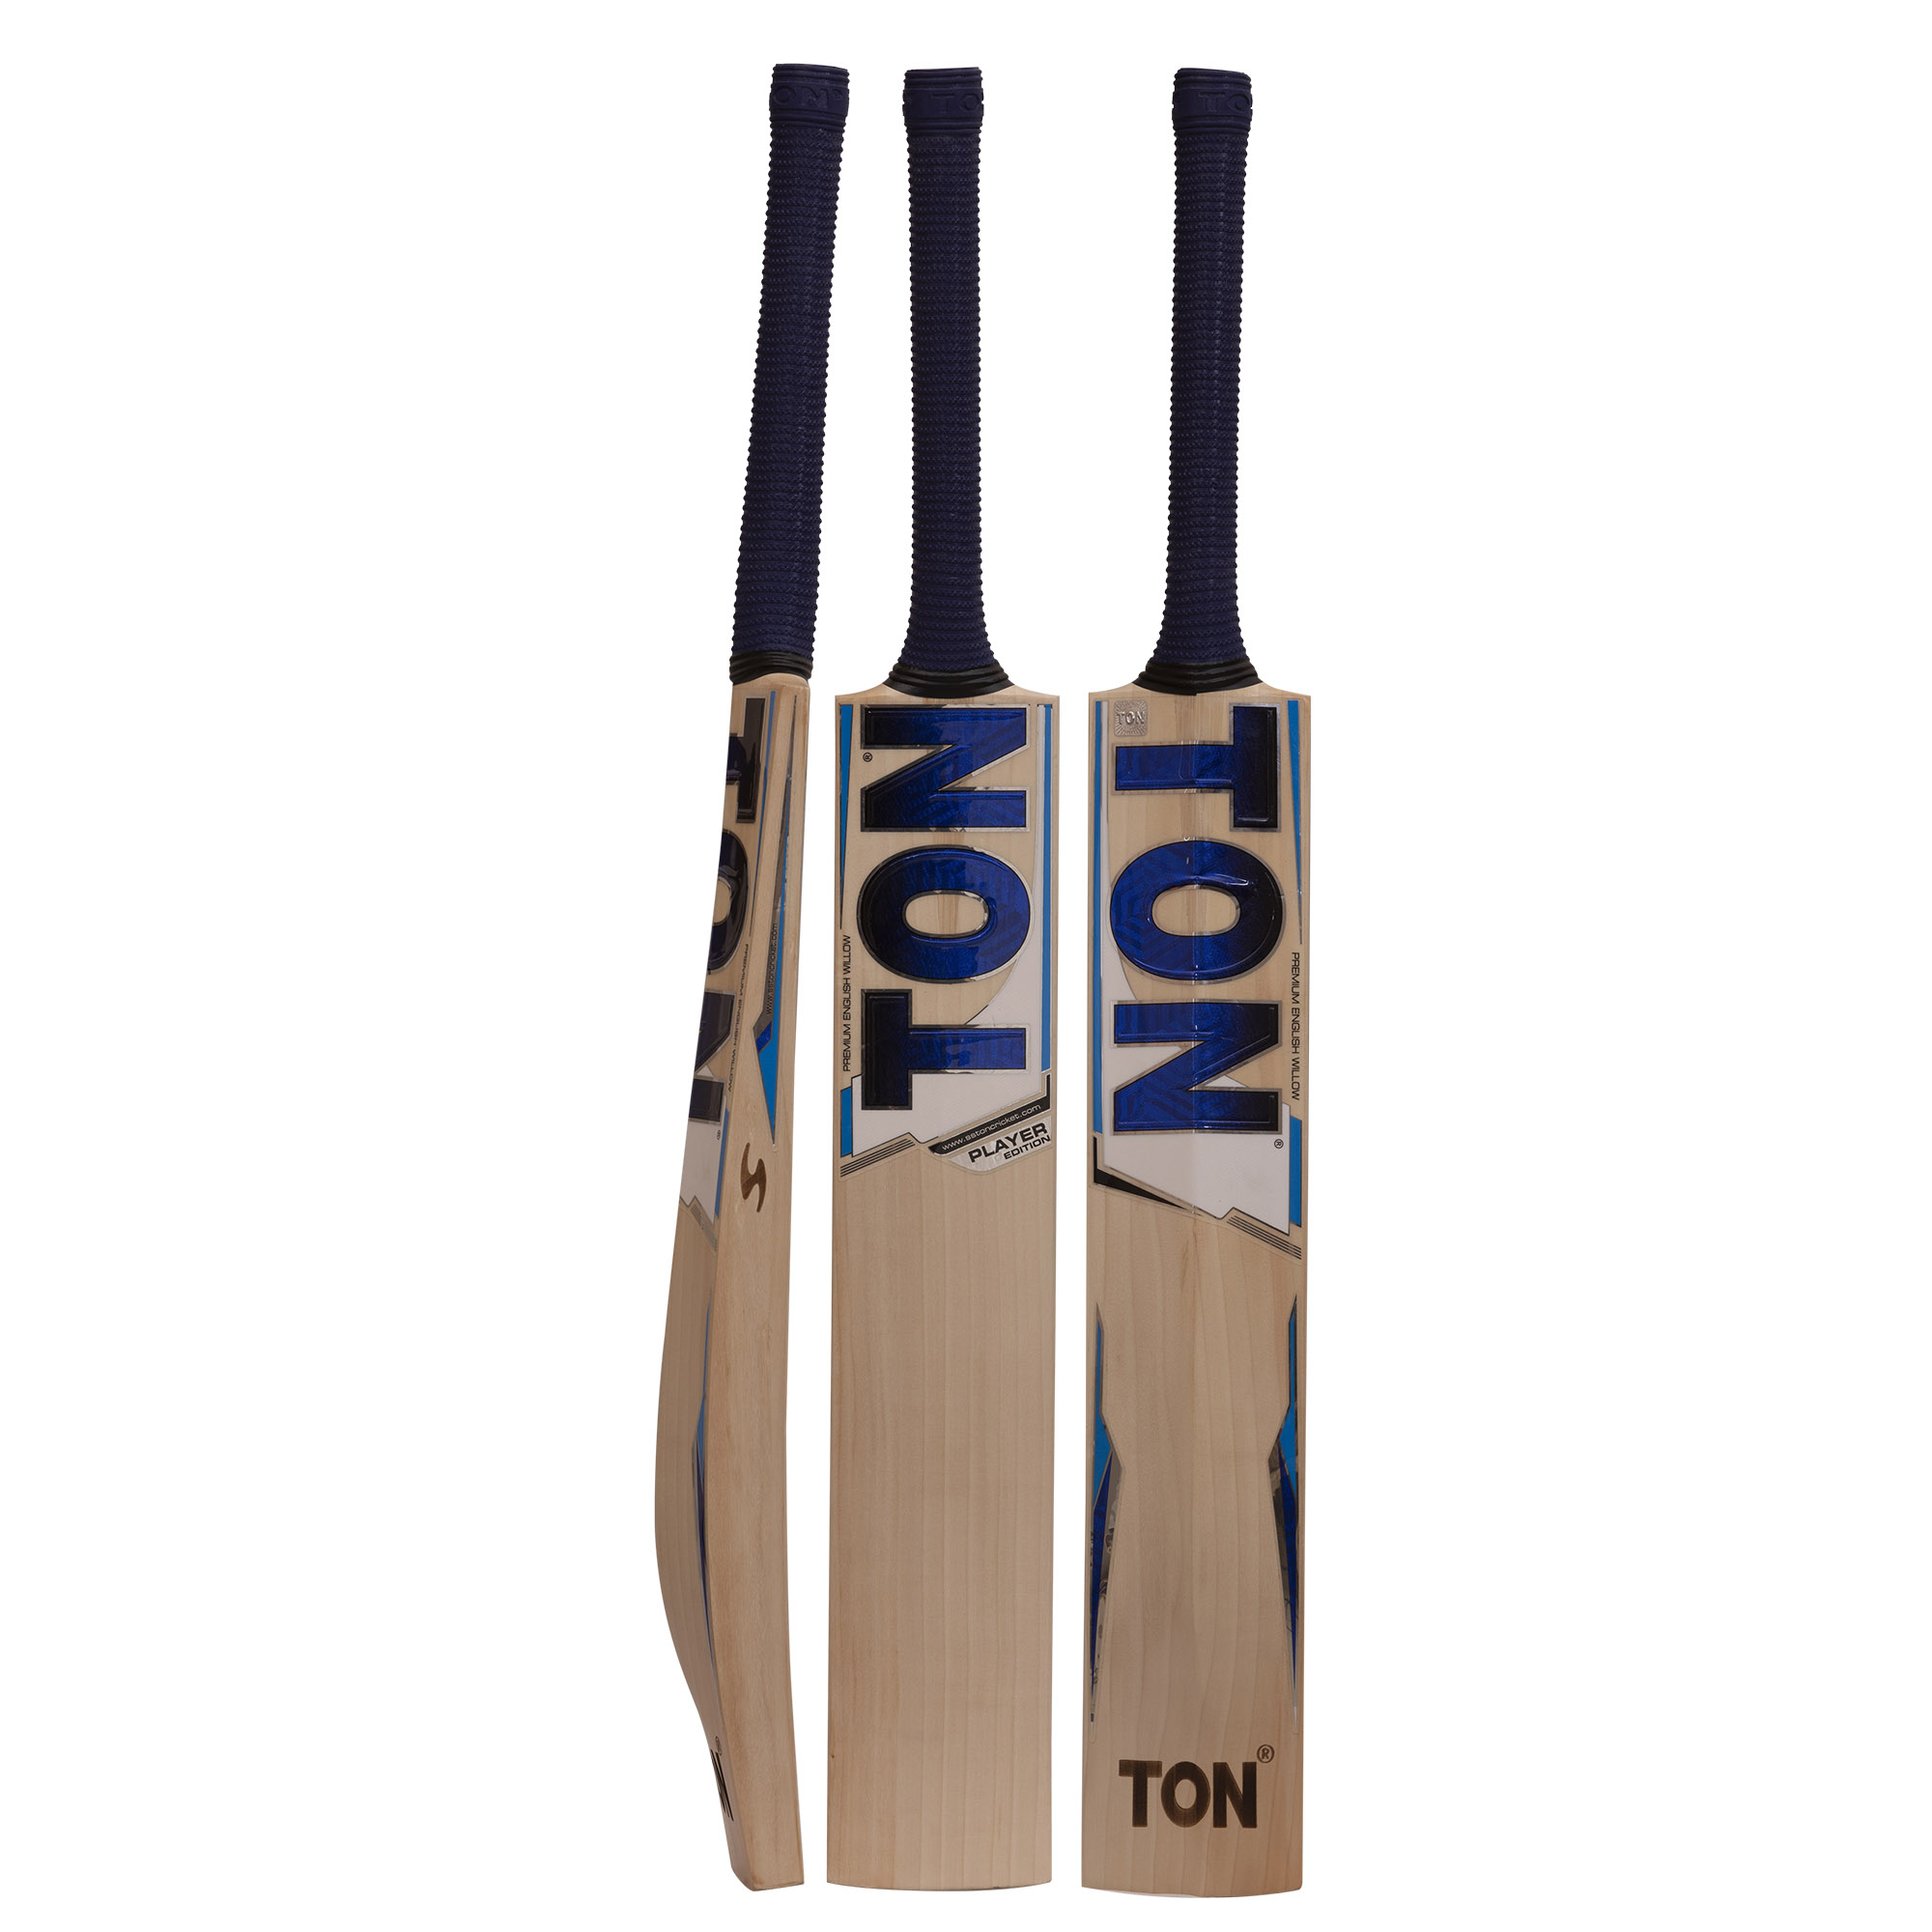 TON-Players-Edition-Cricket-Bat